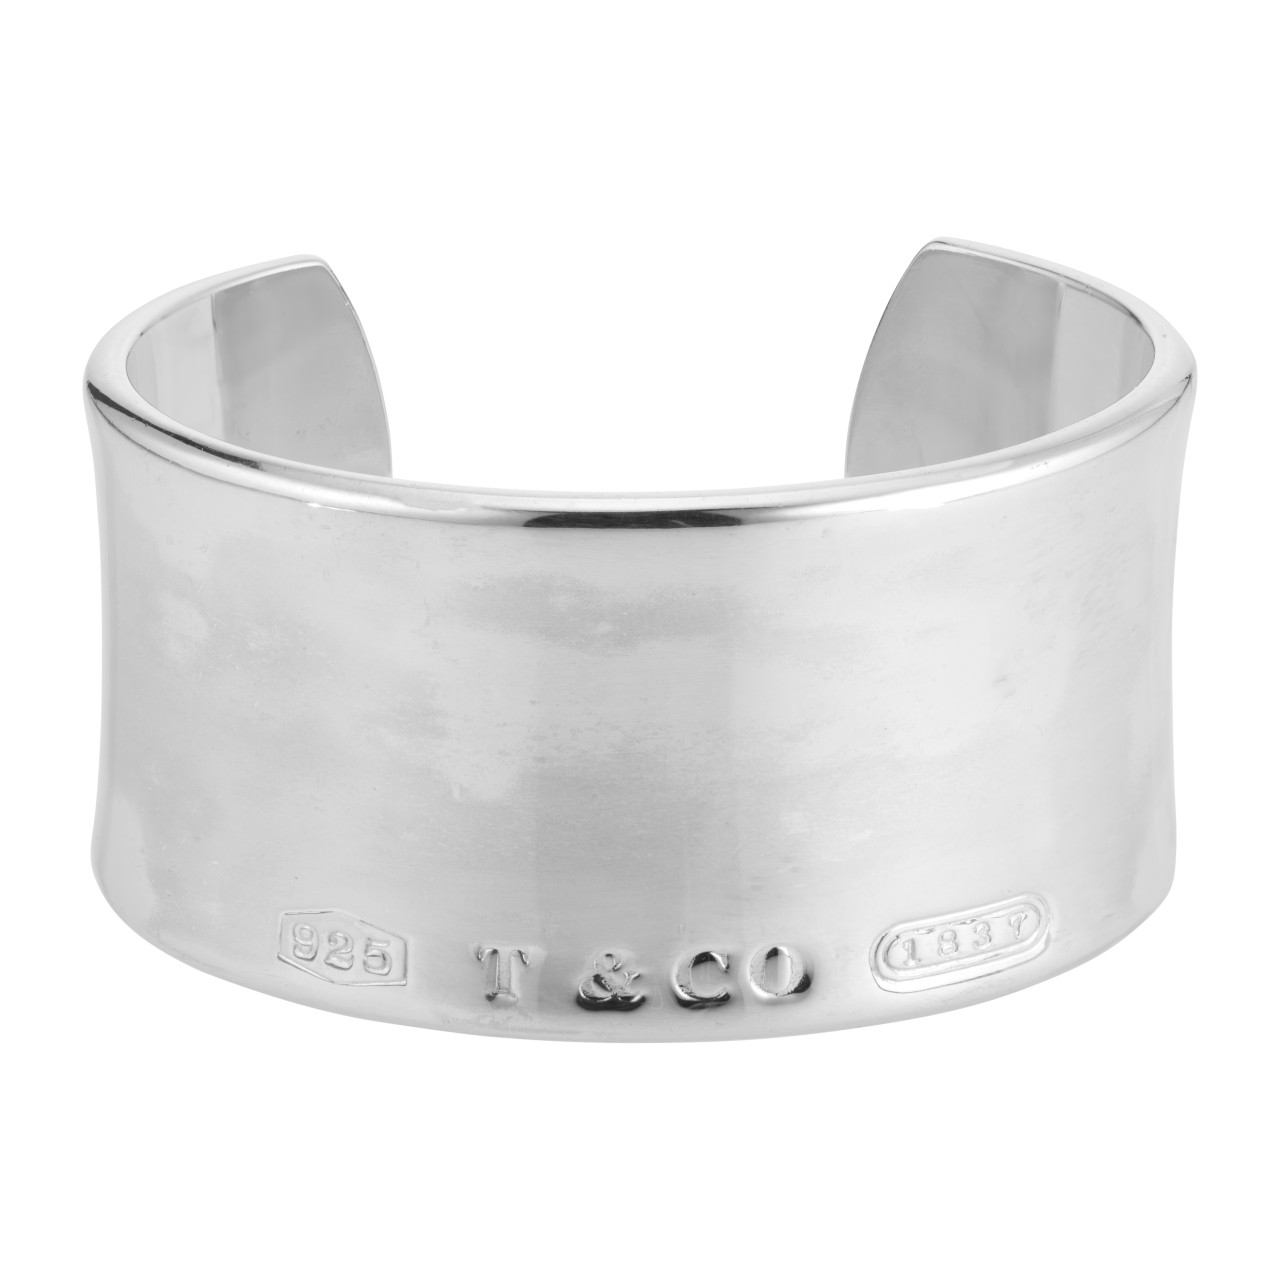 Tiffany & Co. 1837 Silver Cuff Bracelet